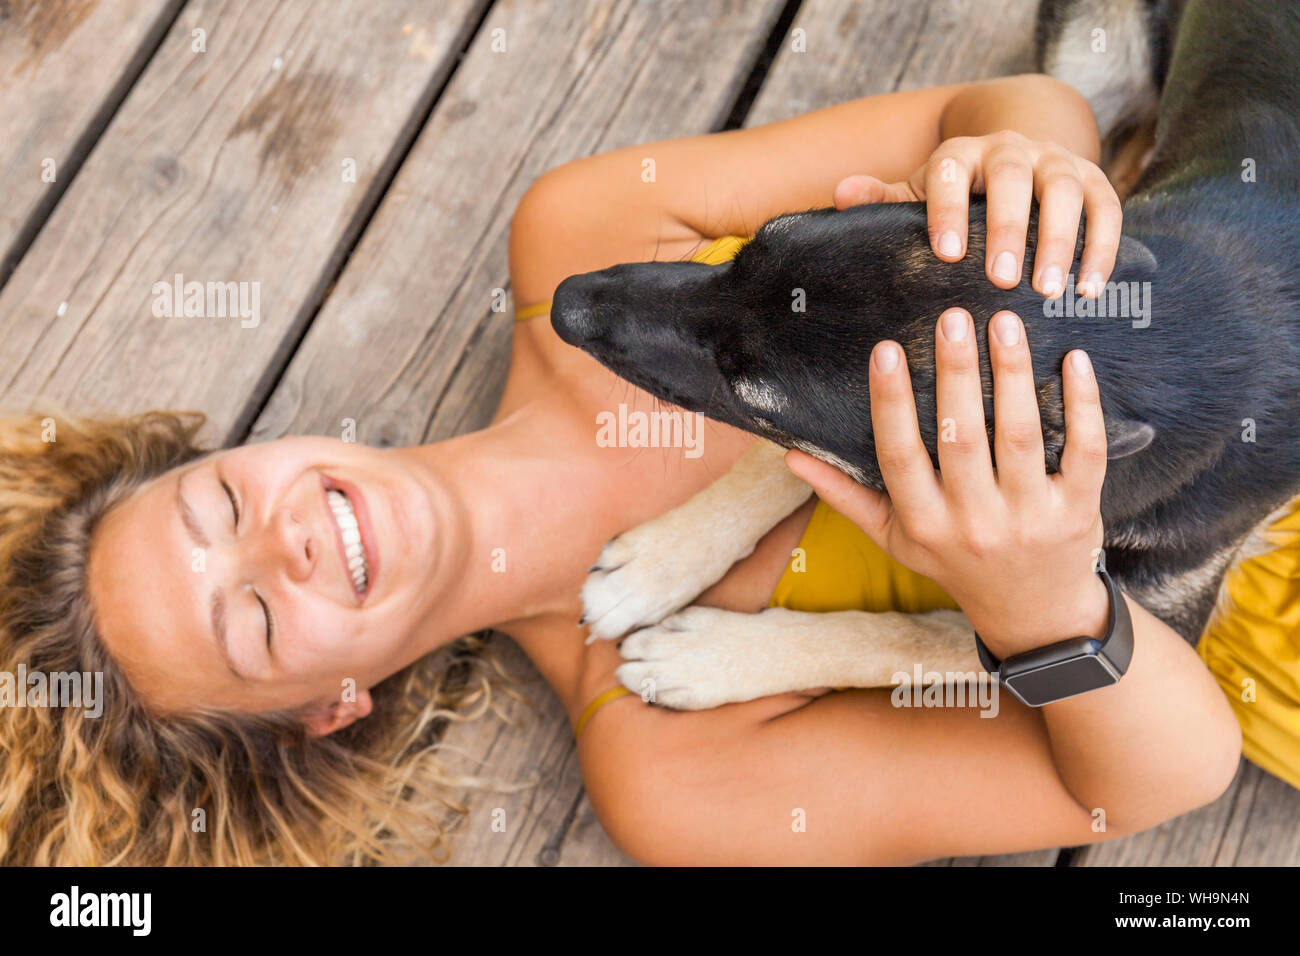 Husky shepherd mongrel dog and his mistress lying on wooden board Stock Photo